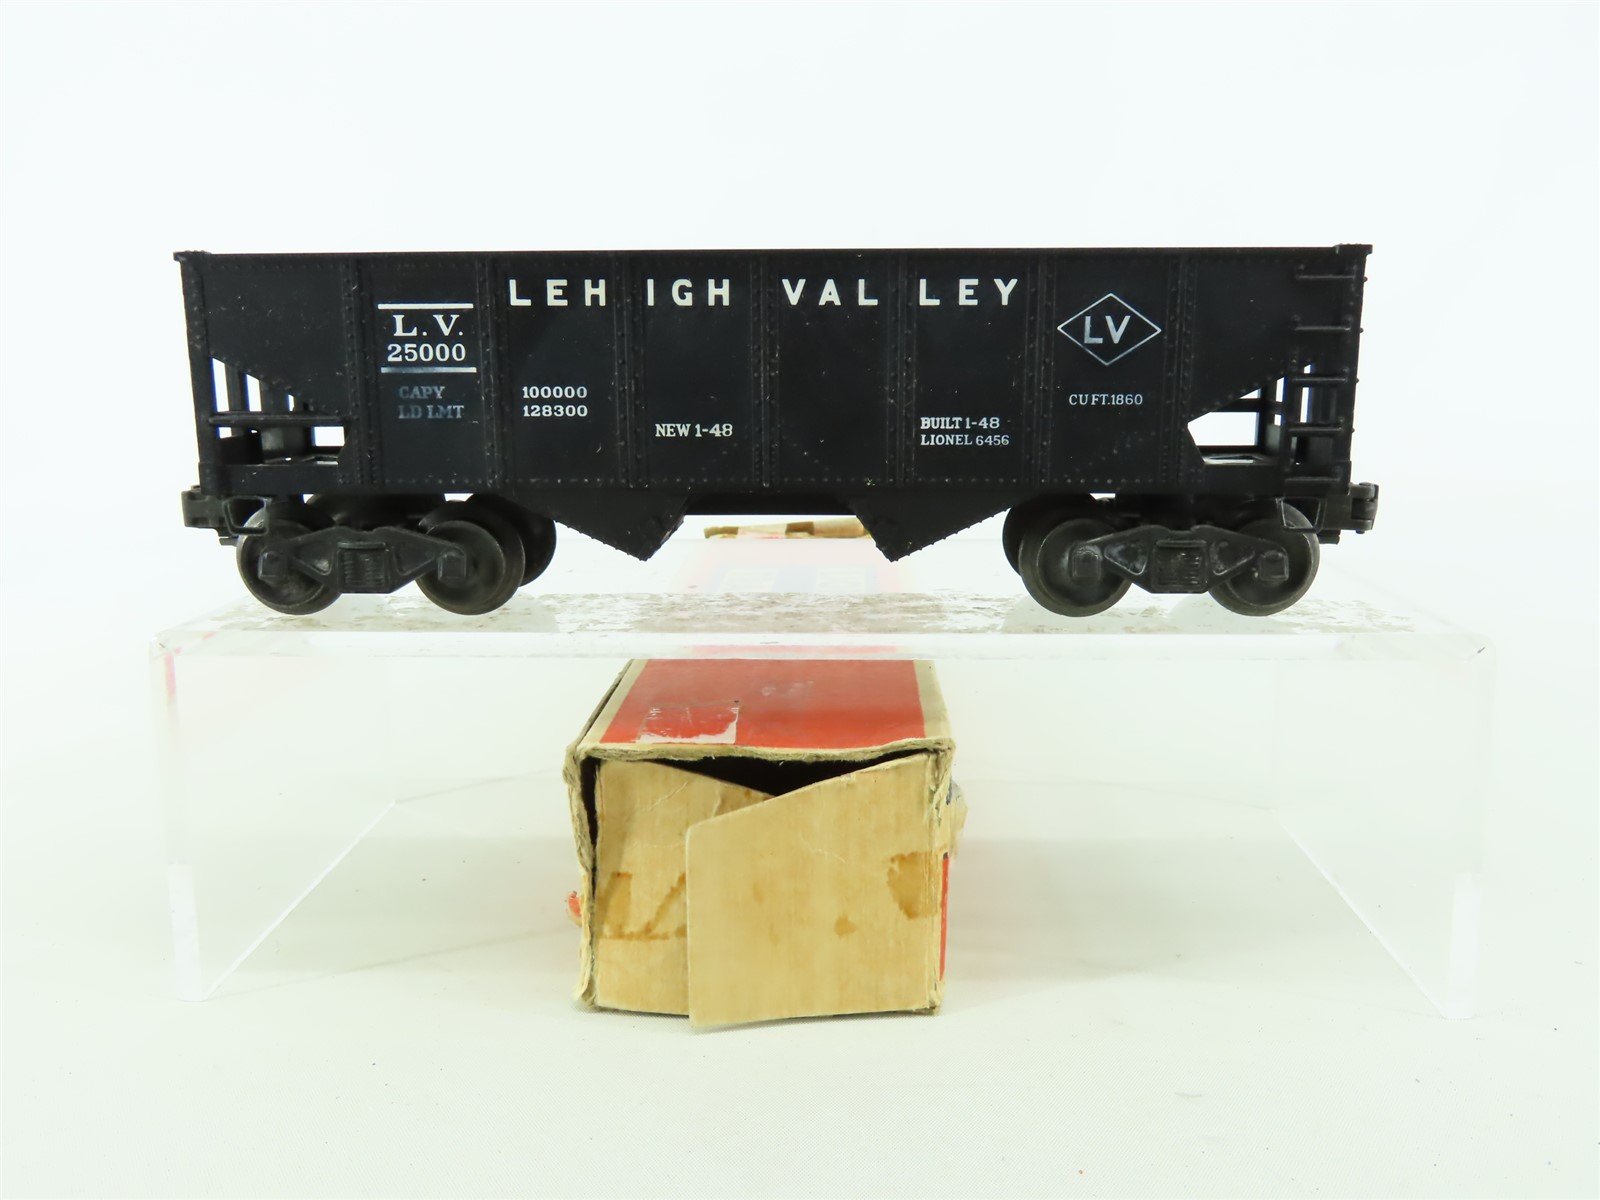 O Gauge 3-Rail Lionel 6456 LV Lehigh Valley 2-Bay Open Hopper #25000 - Restored